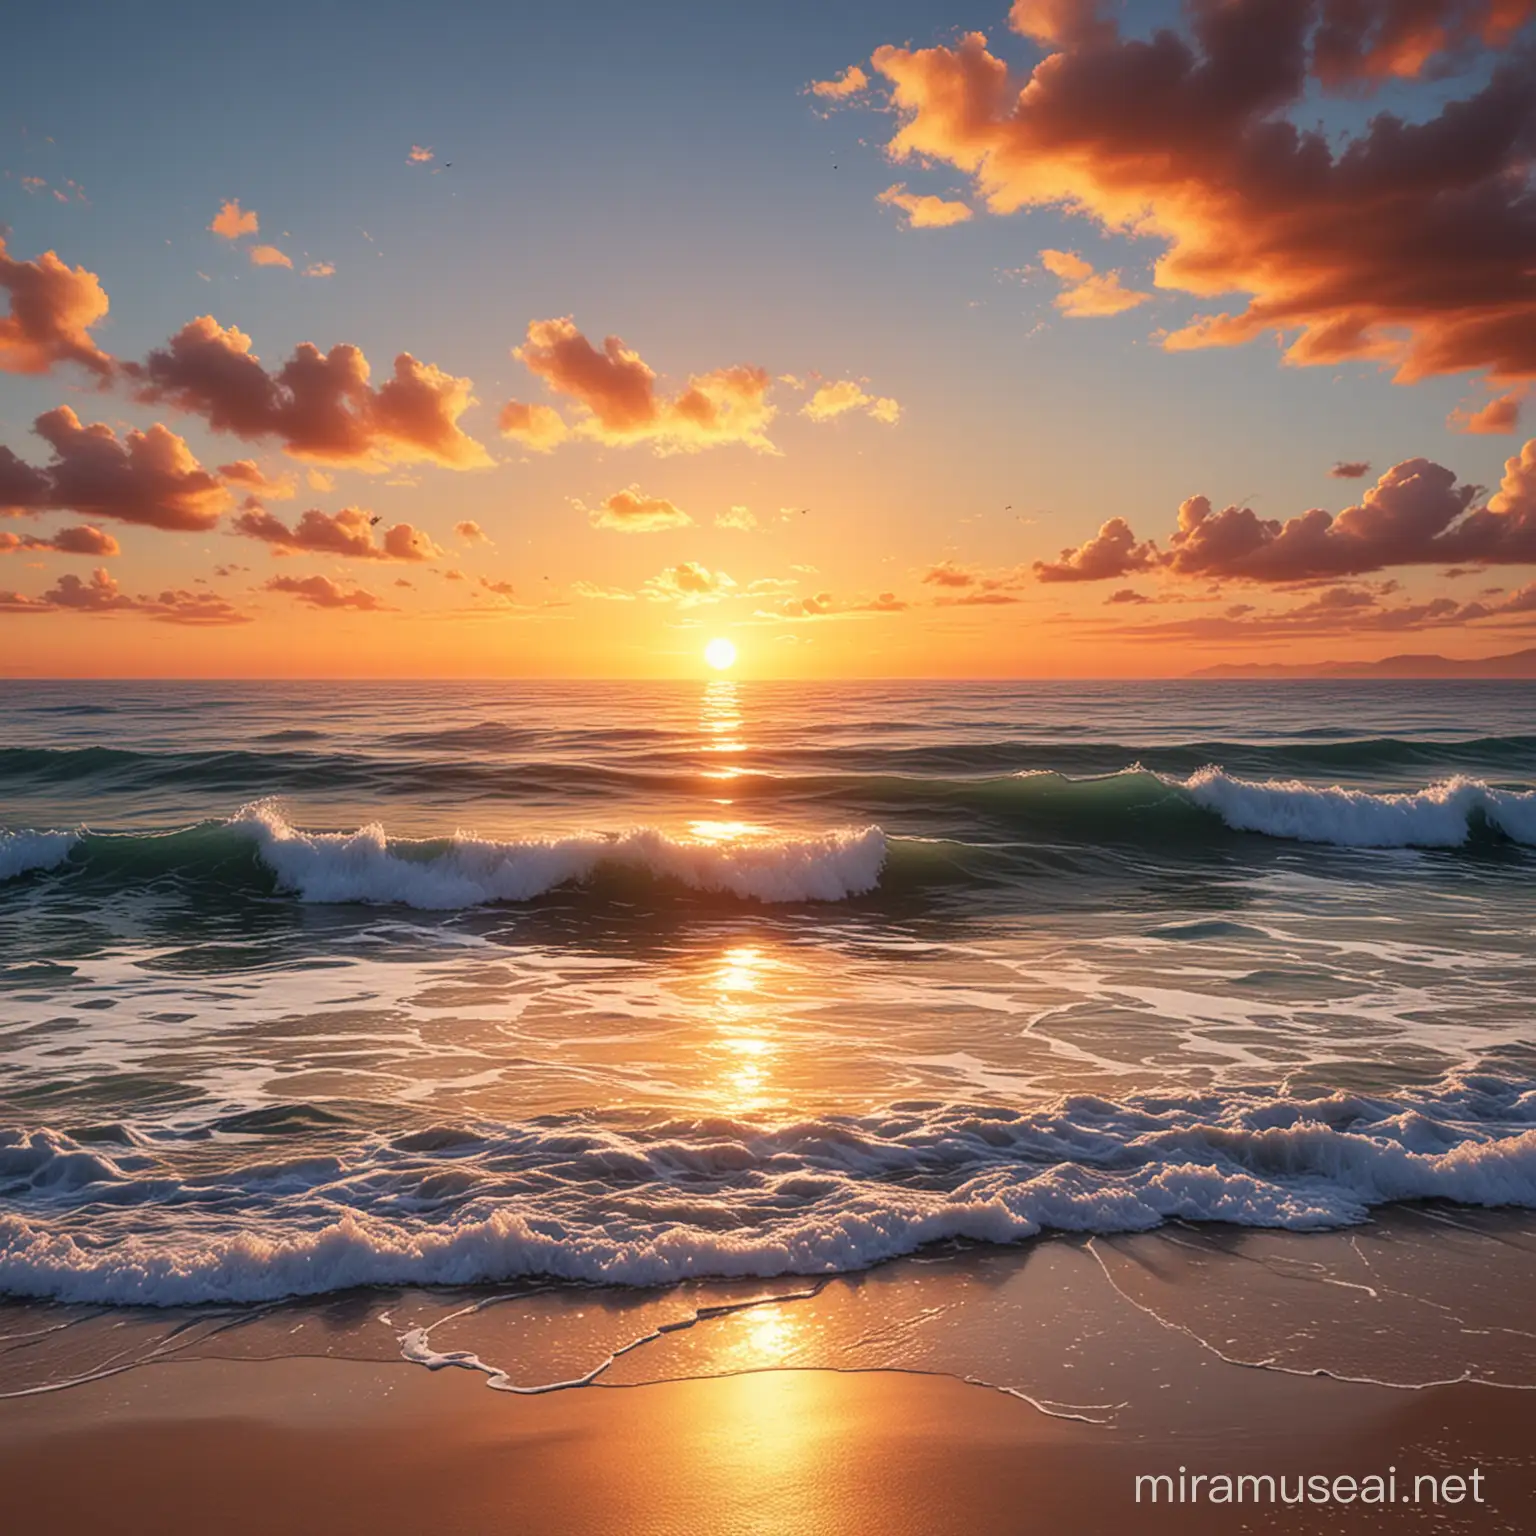 A beautiful sunset, ocean view, realistic art